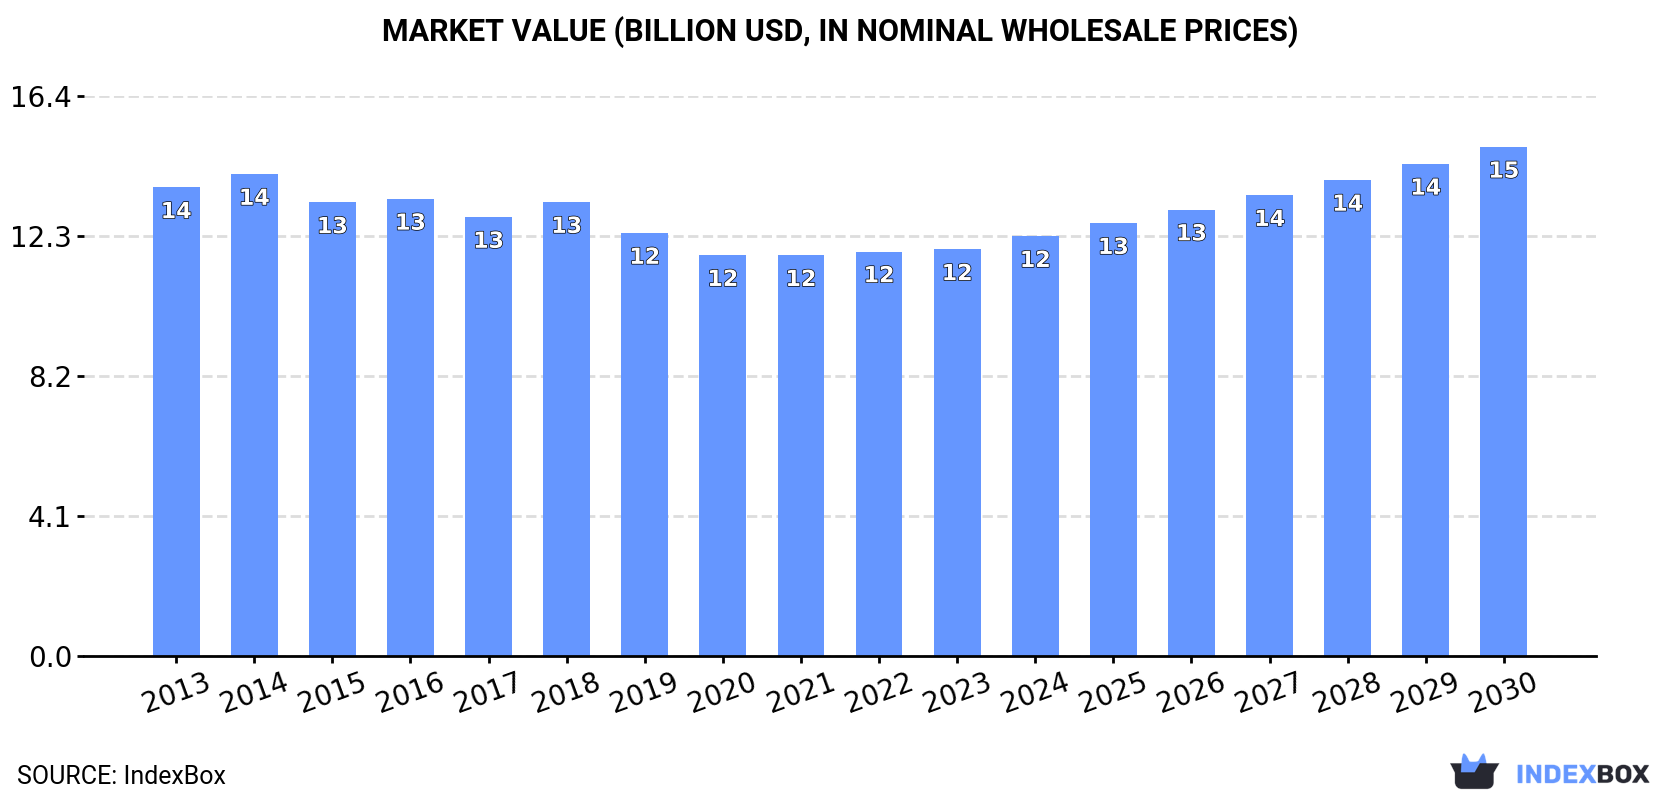 Market Value (billion USD, nominal prices)